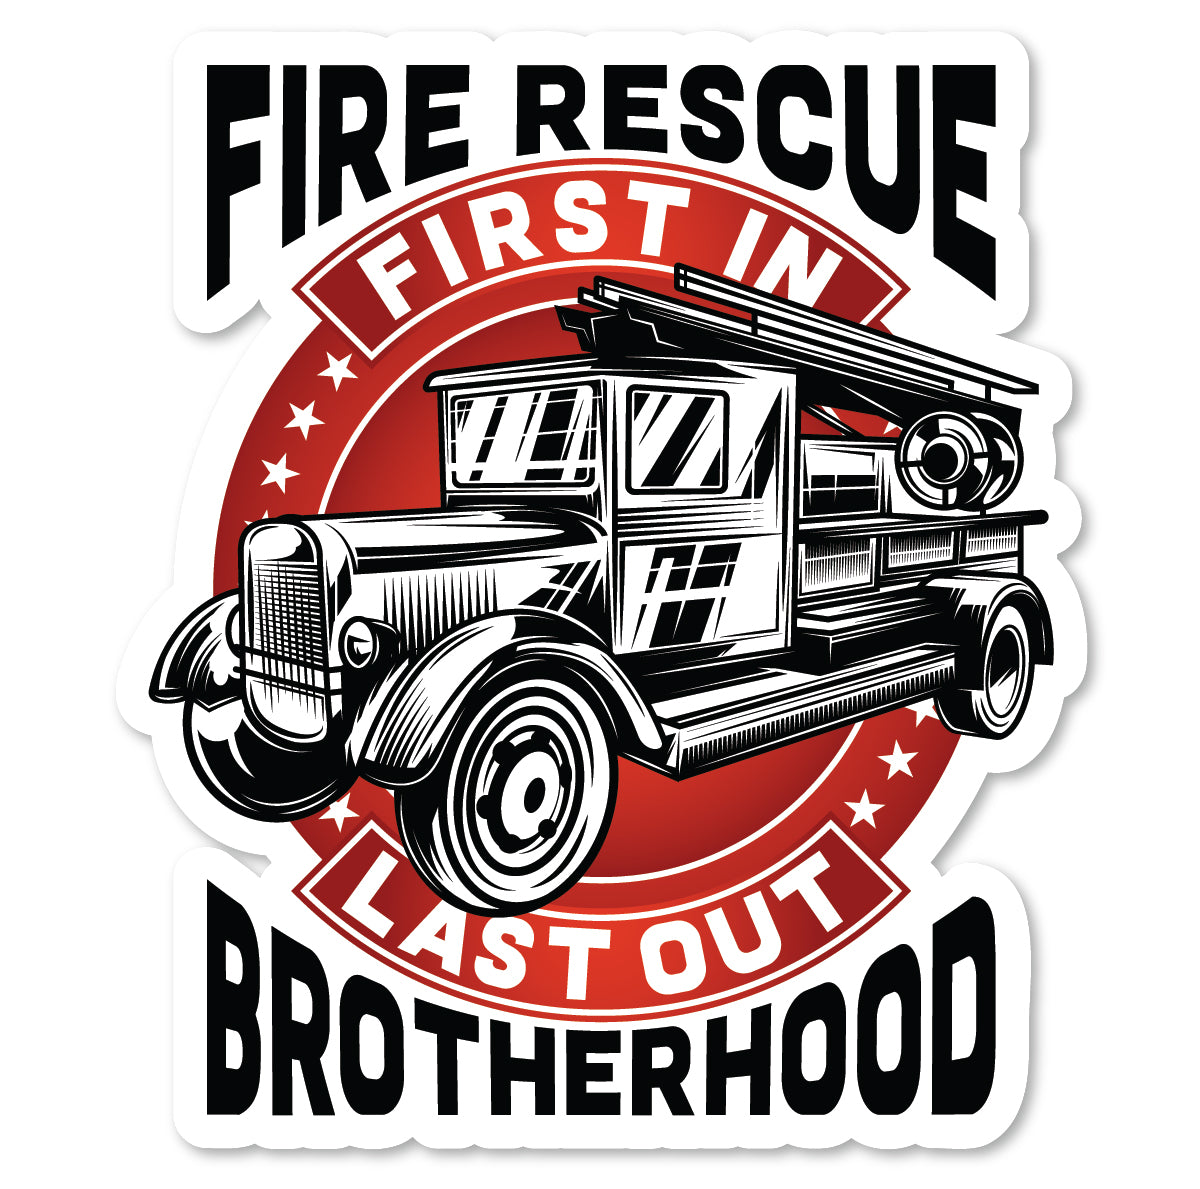 SP-100 | Fire Rescue Brotherhood